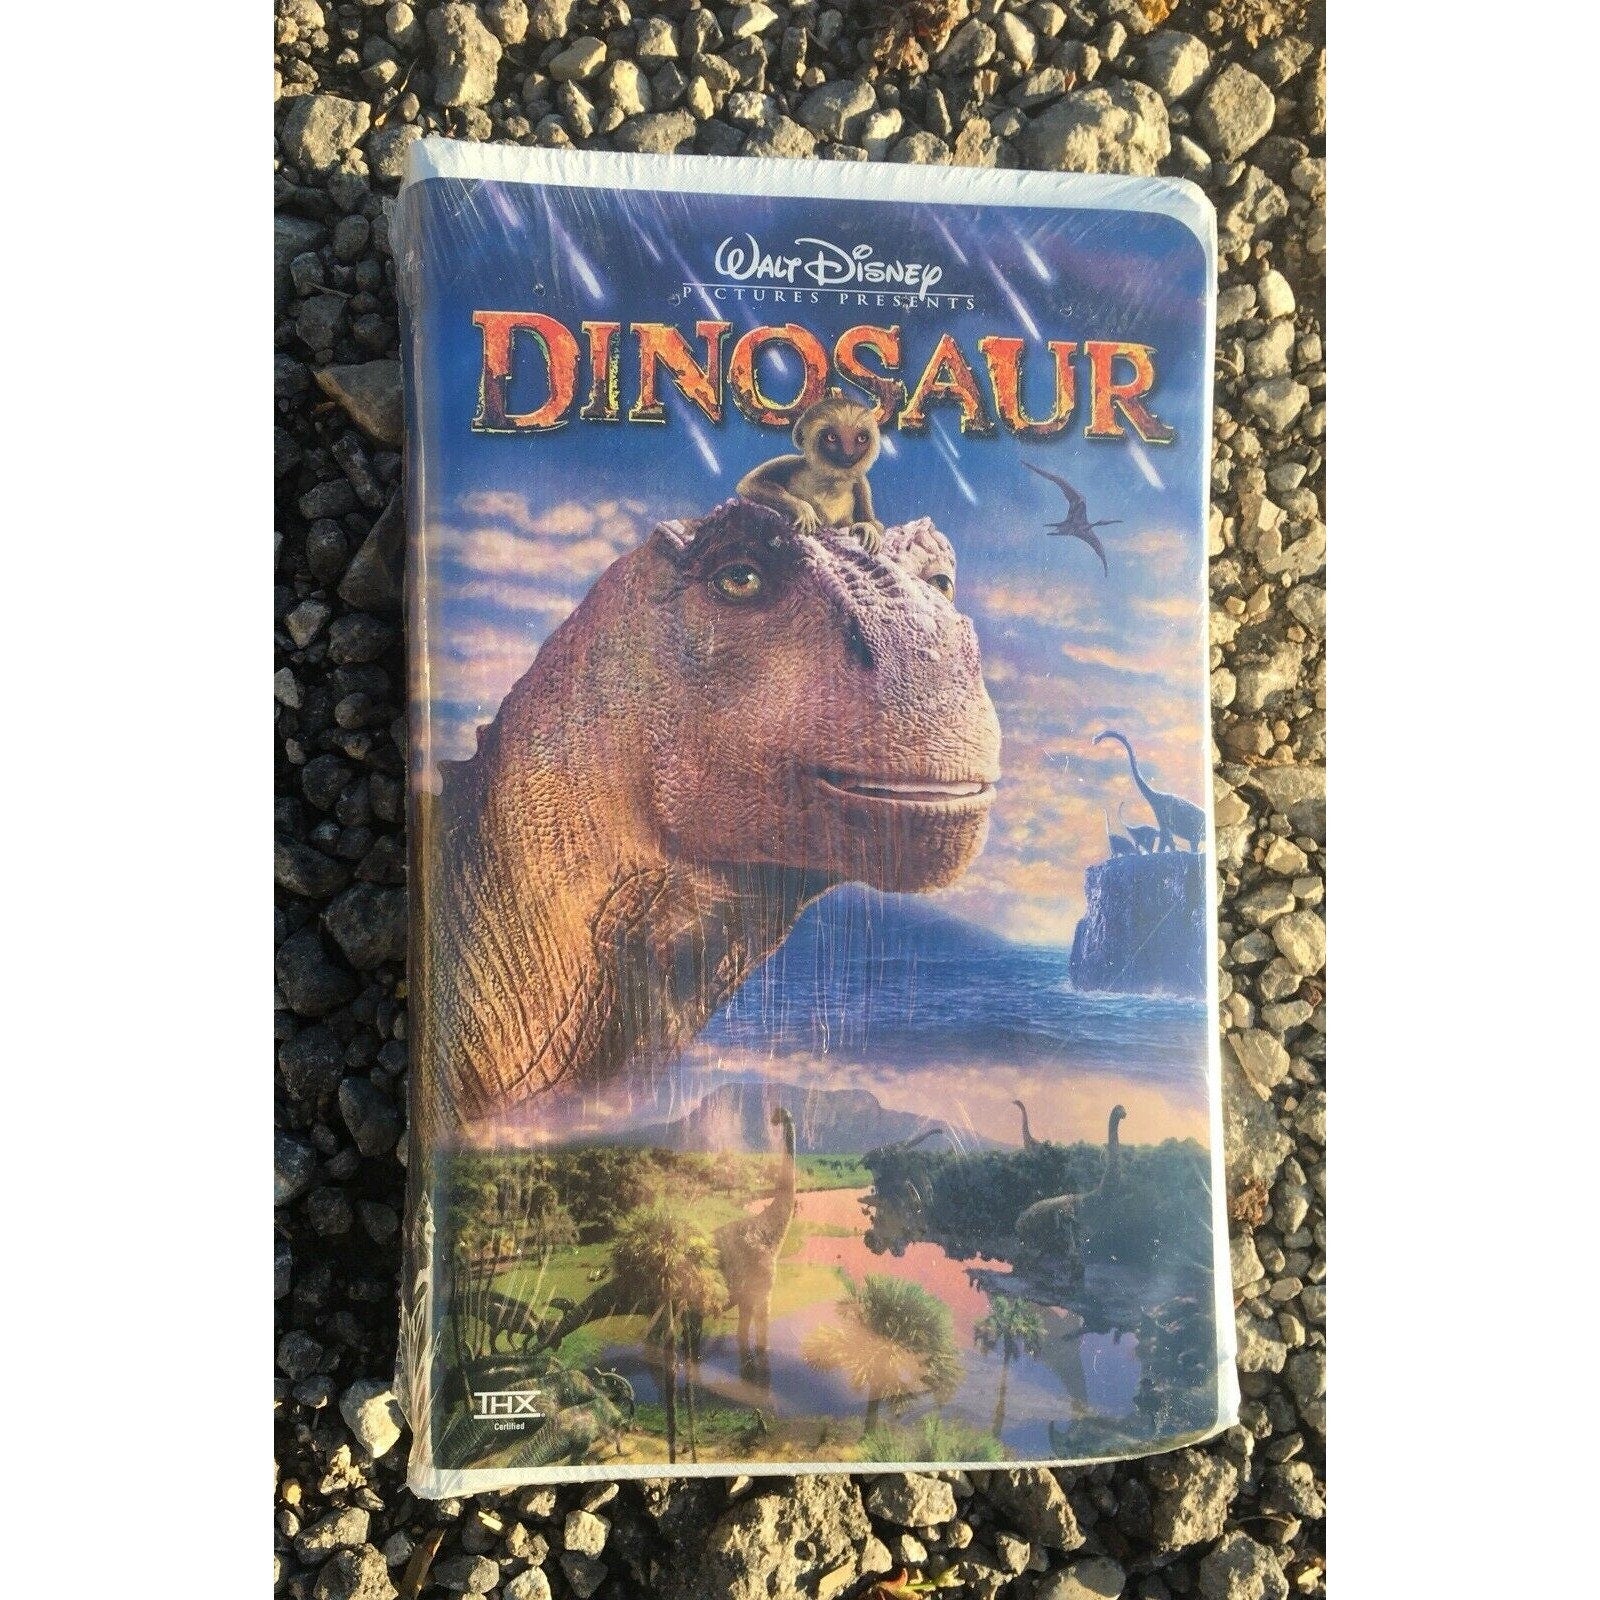 Dinosaur (VHS, 2001) clamshell New Sealed